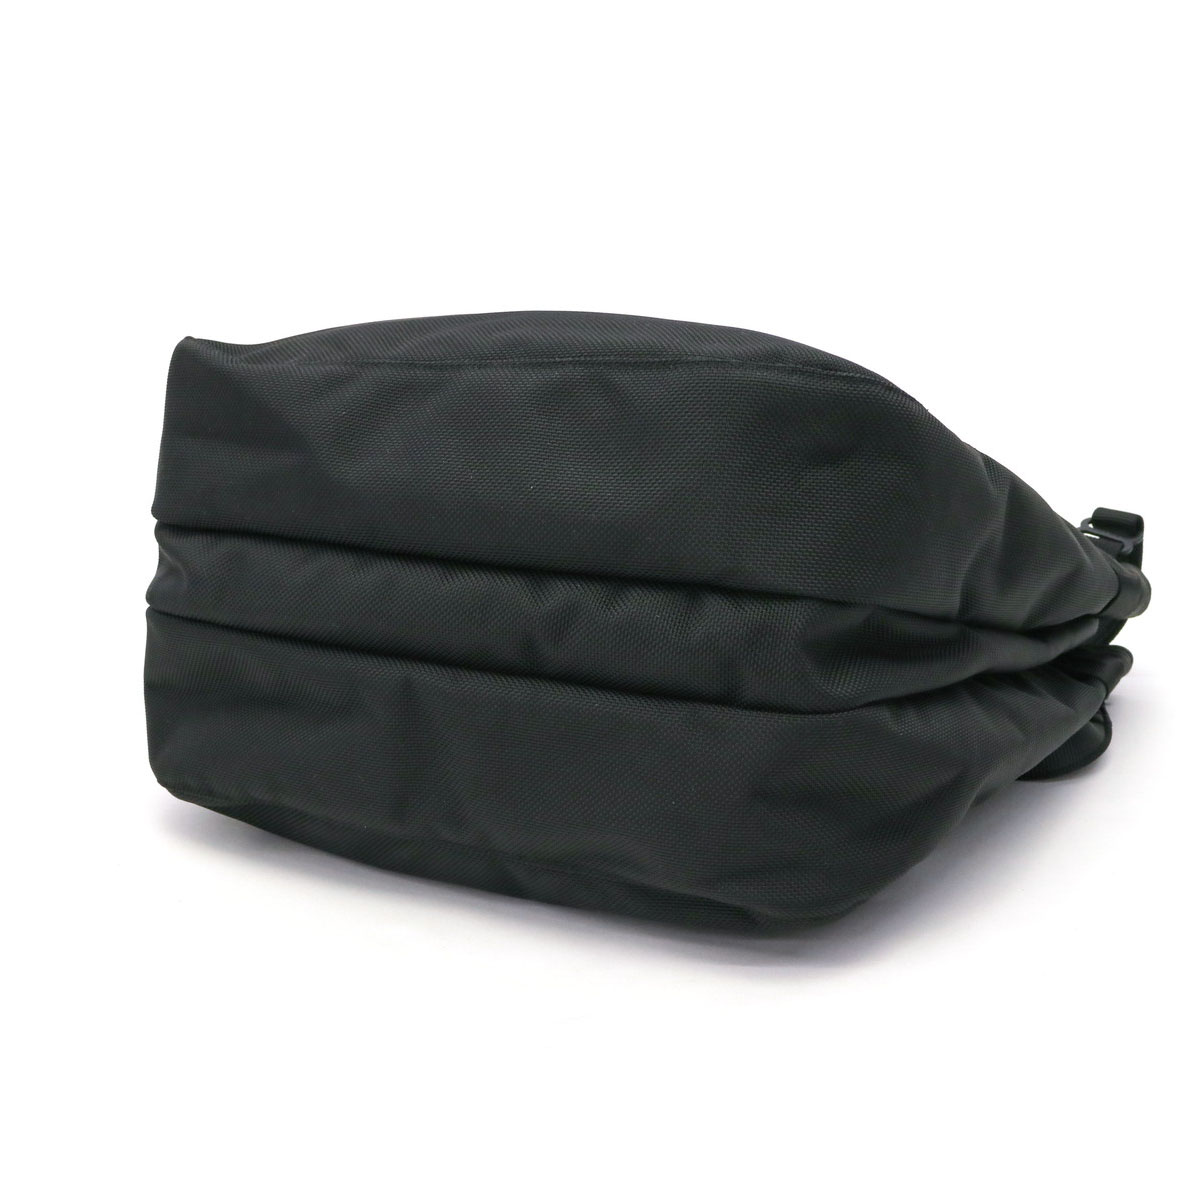 GALLERIA Bag-Luggage: BRIEFING Tote Bag R3 TOTE 3 Room A4 Men's Women's